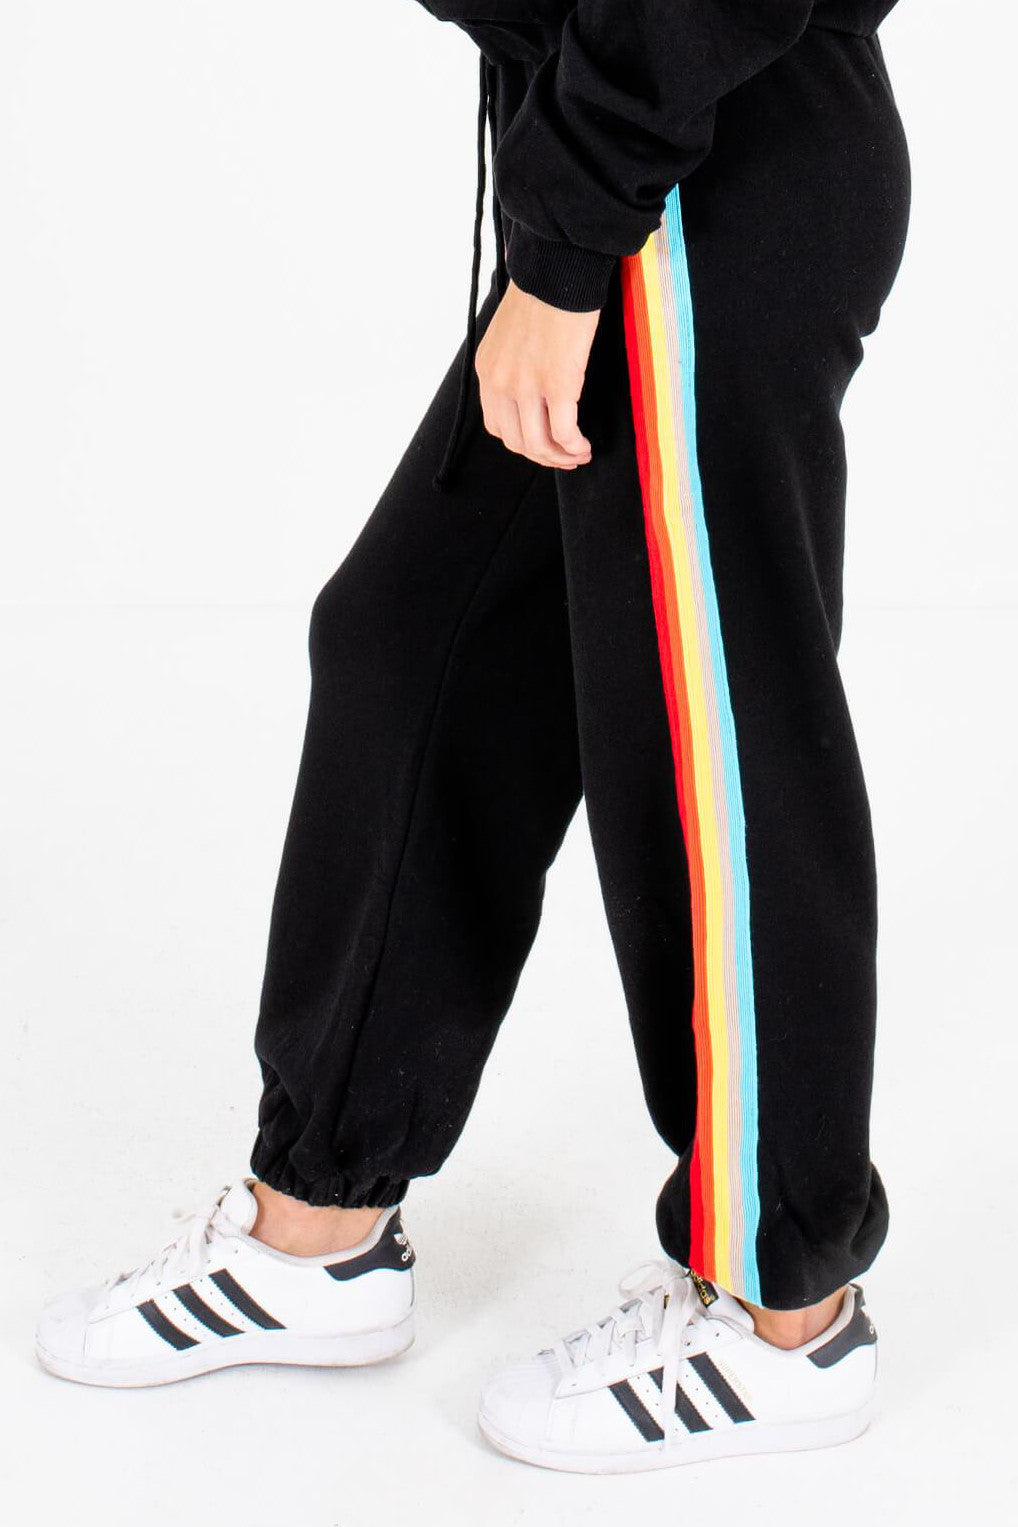 Black Multicolored Striped Boutique Jogger Pants for Women